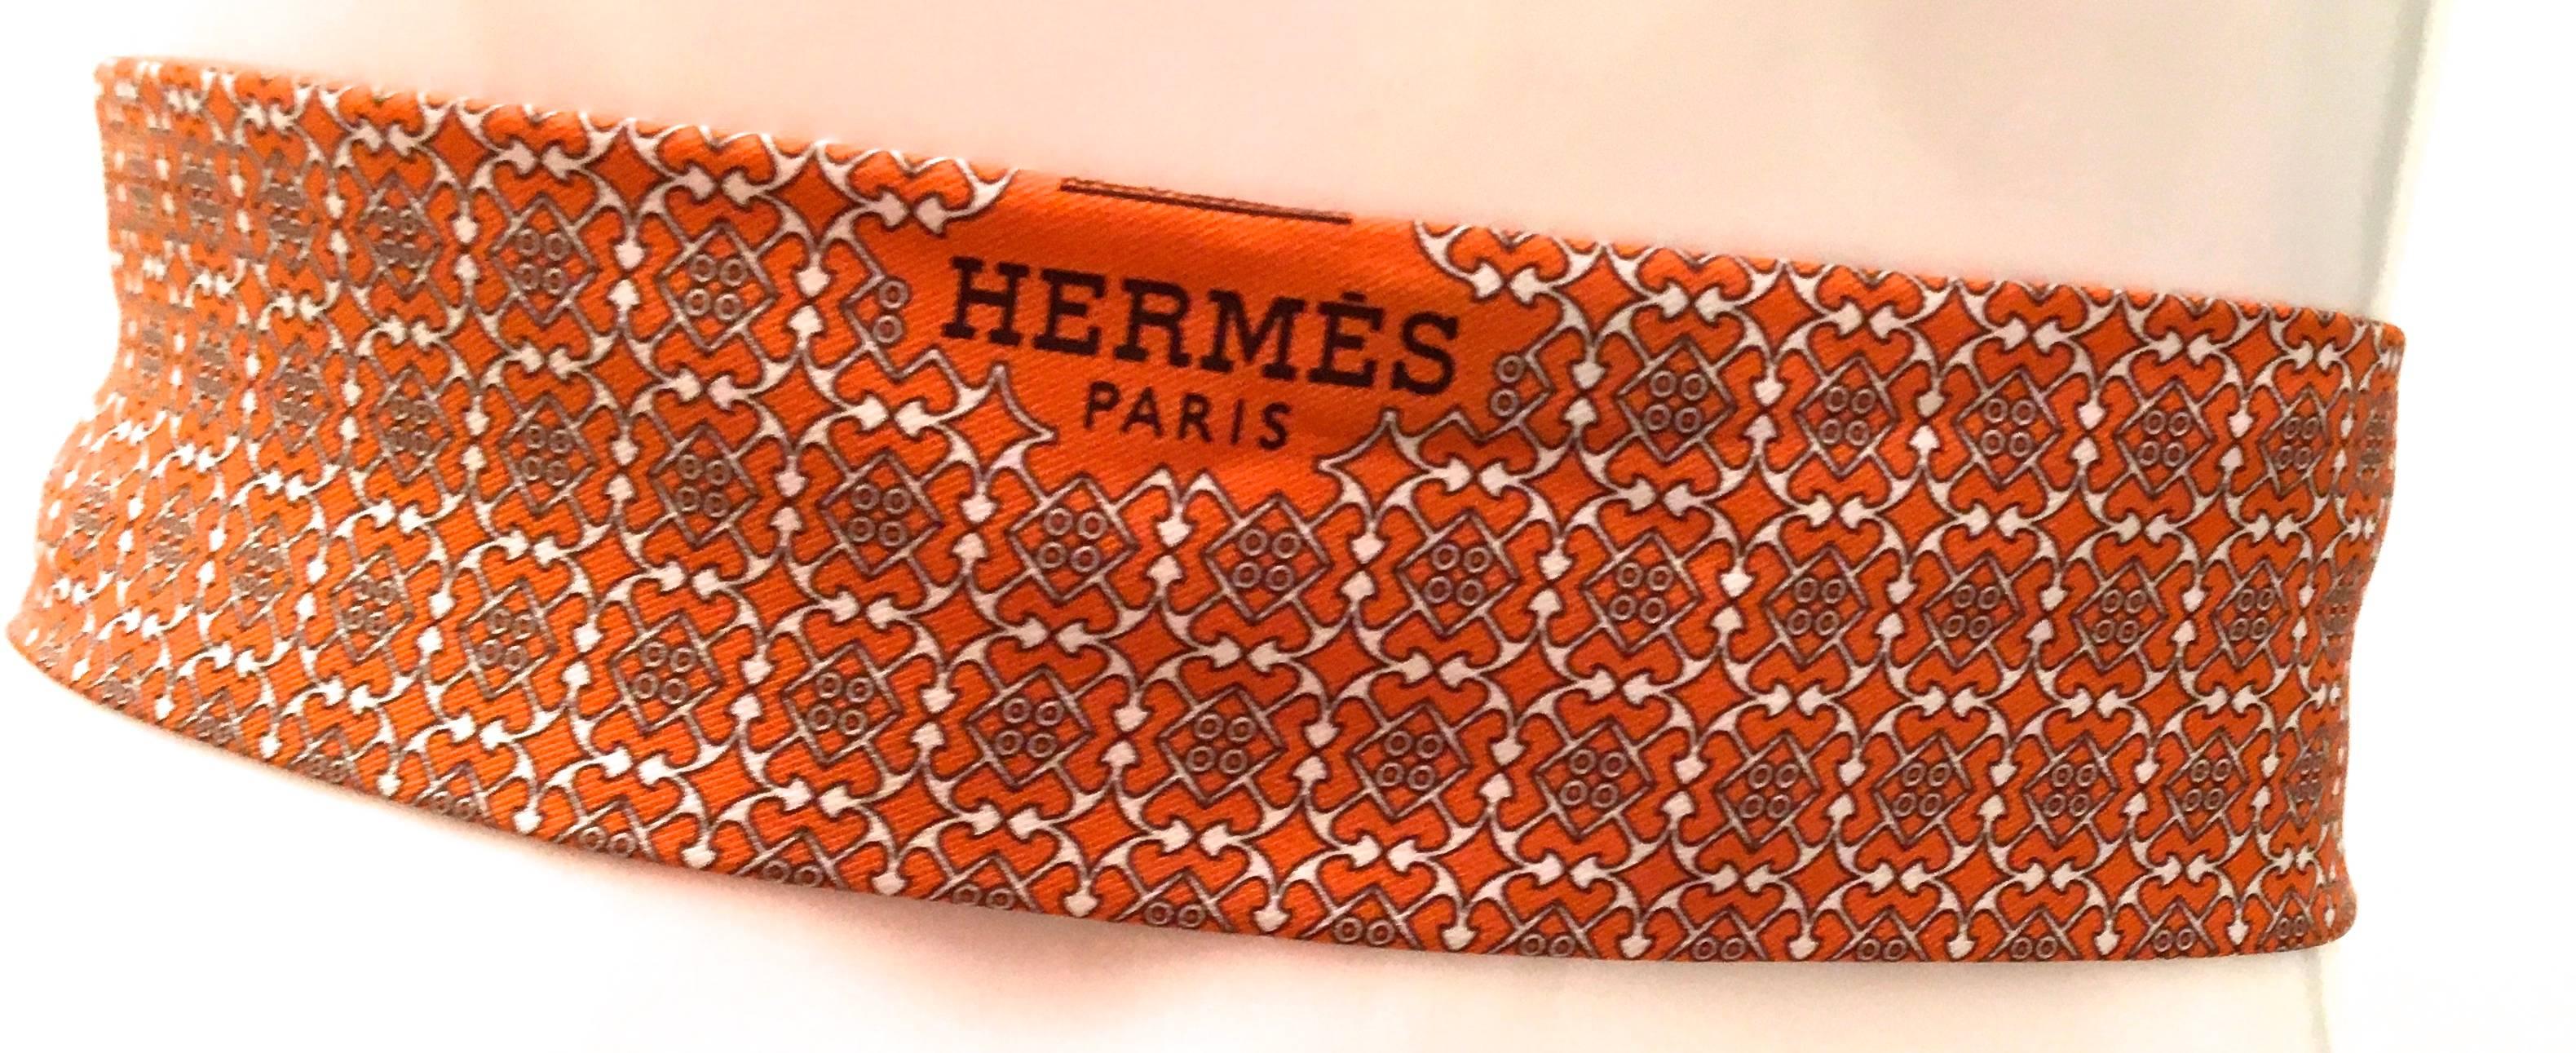 Rare Hermes Scarf / Tie / Belt - 100% Silk - New  For Sale 4